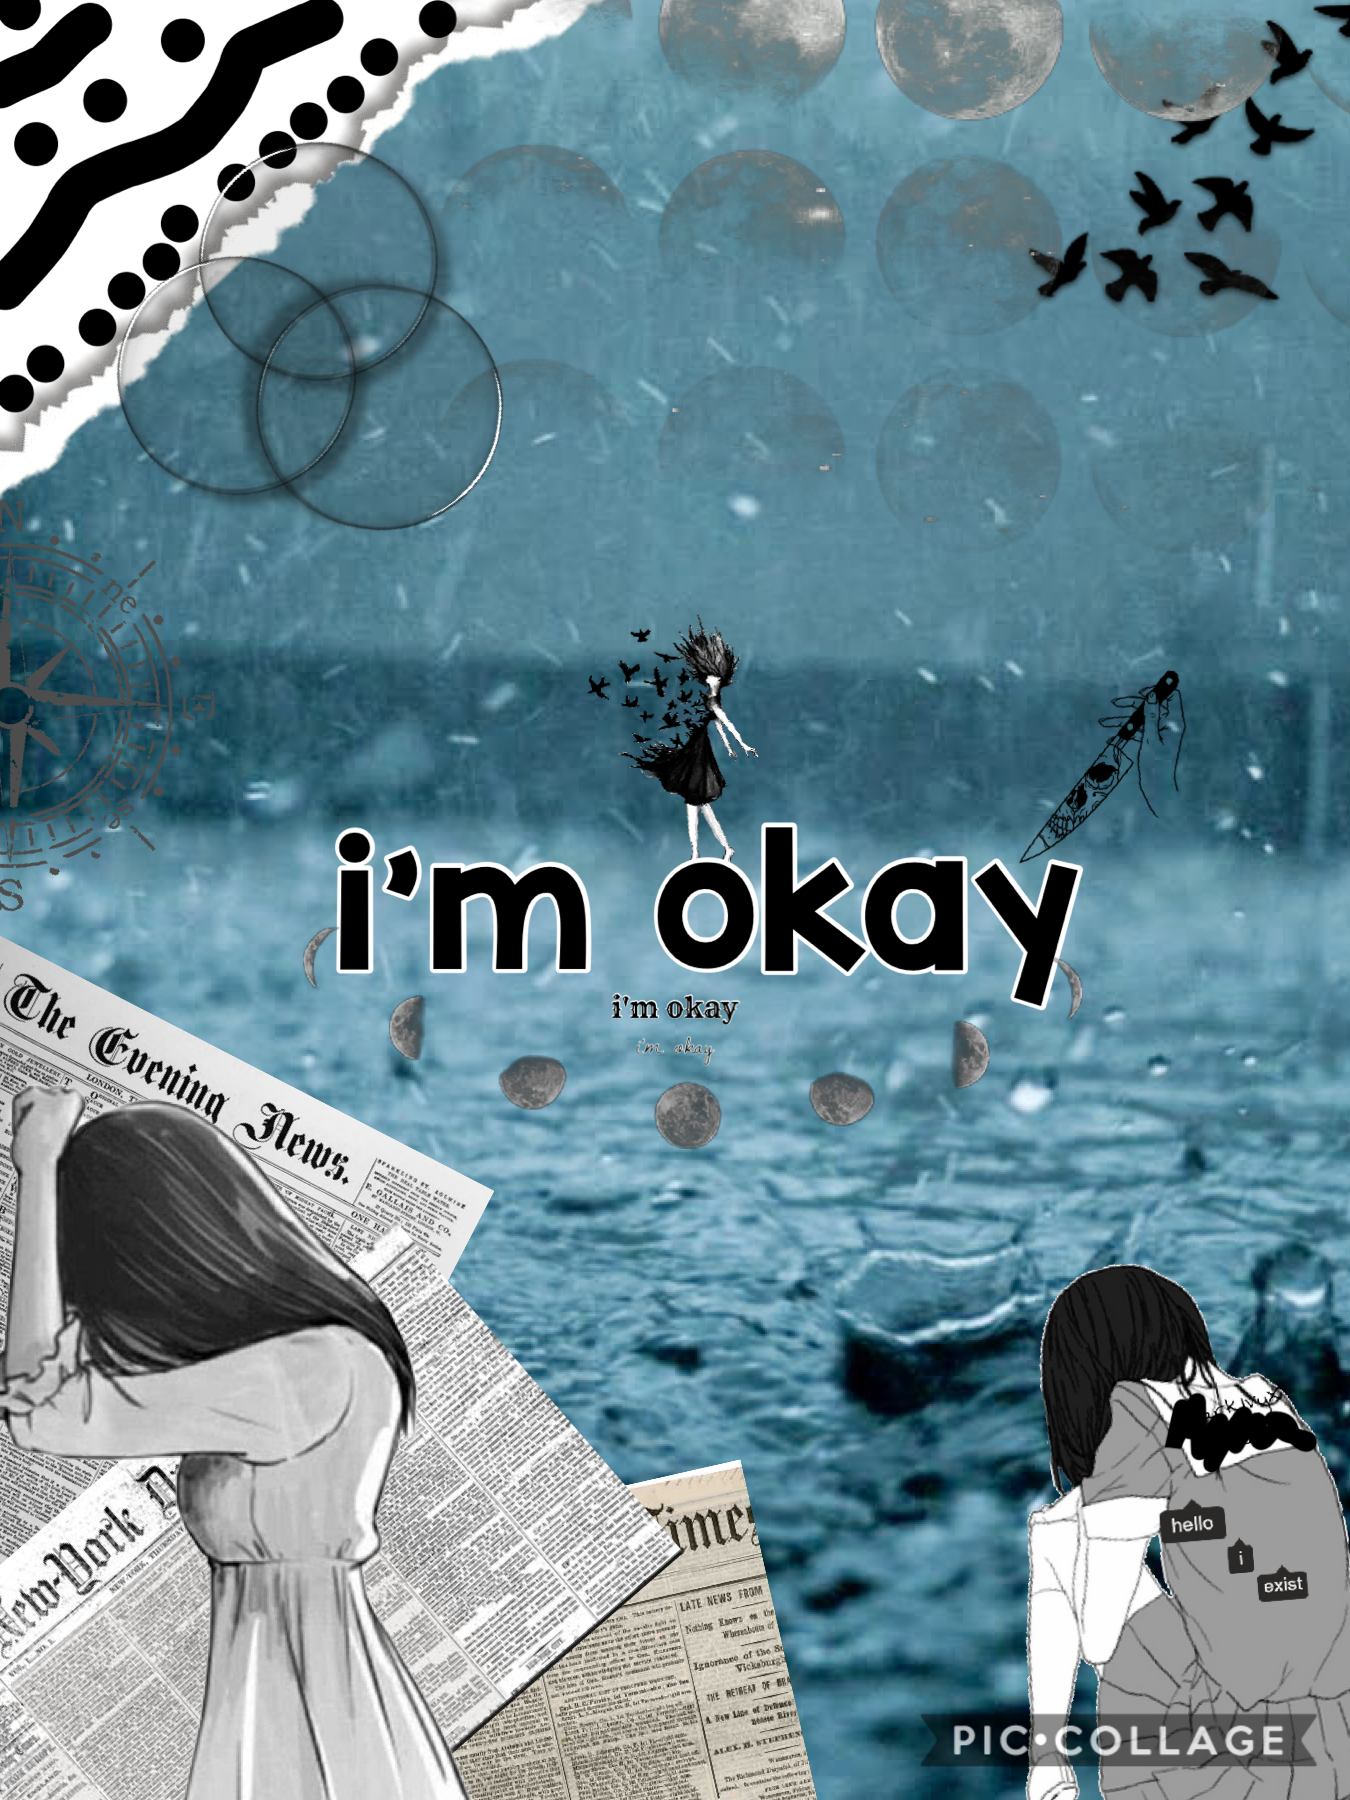 🖤
hi
i'm ok
seriously 